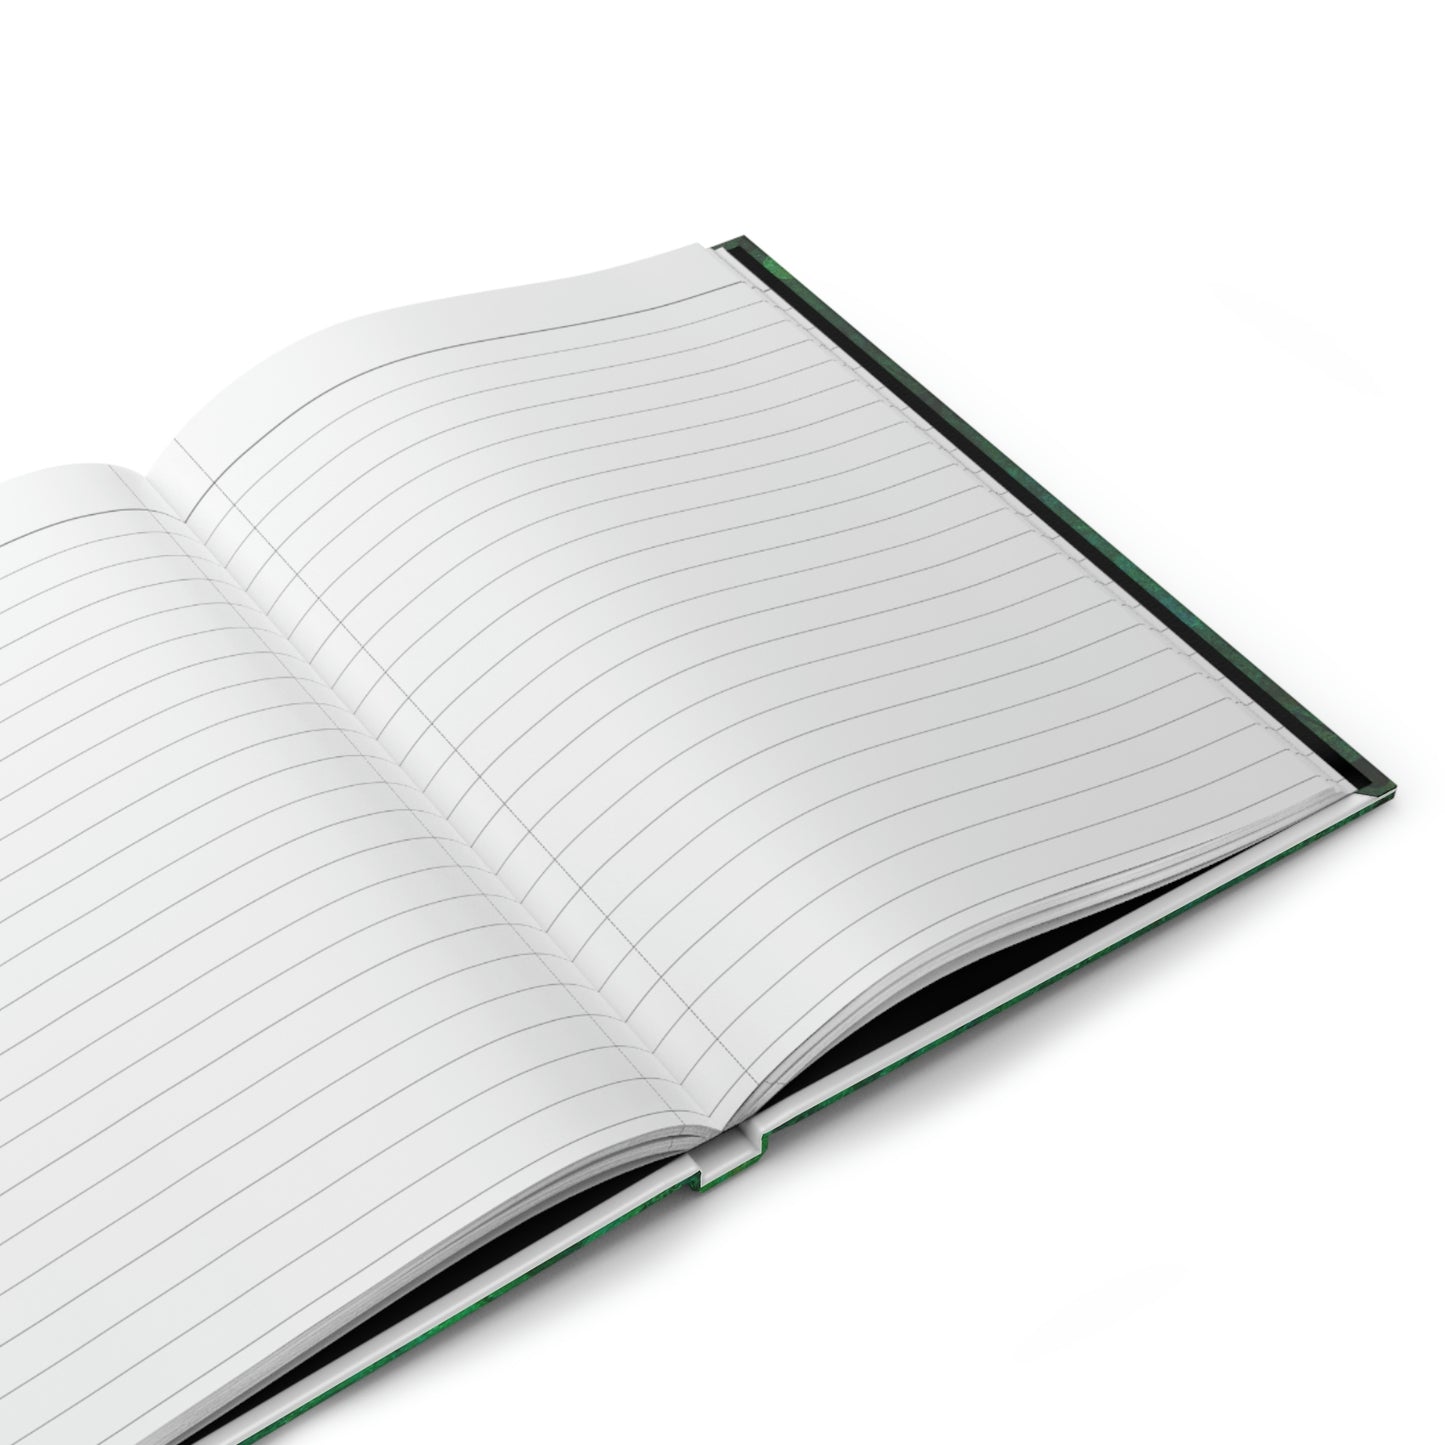 Arty March Notebook Book Hardcover Journal Matte